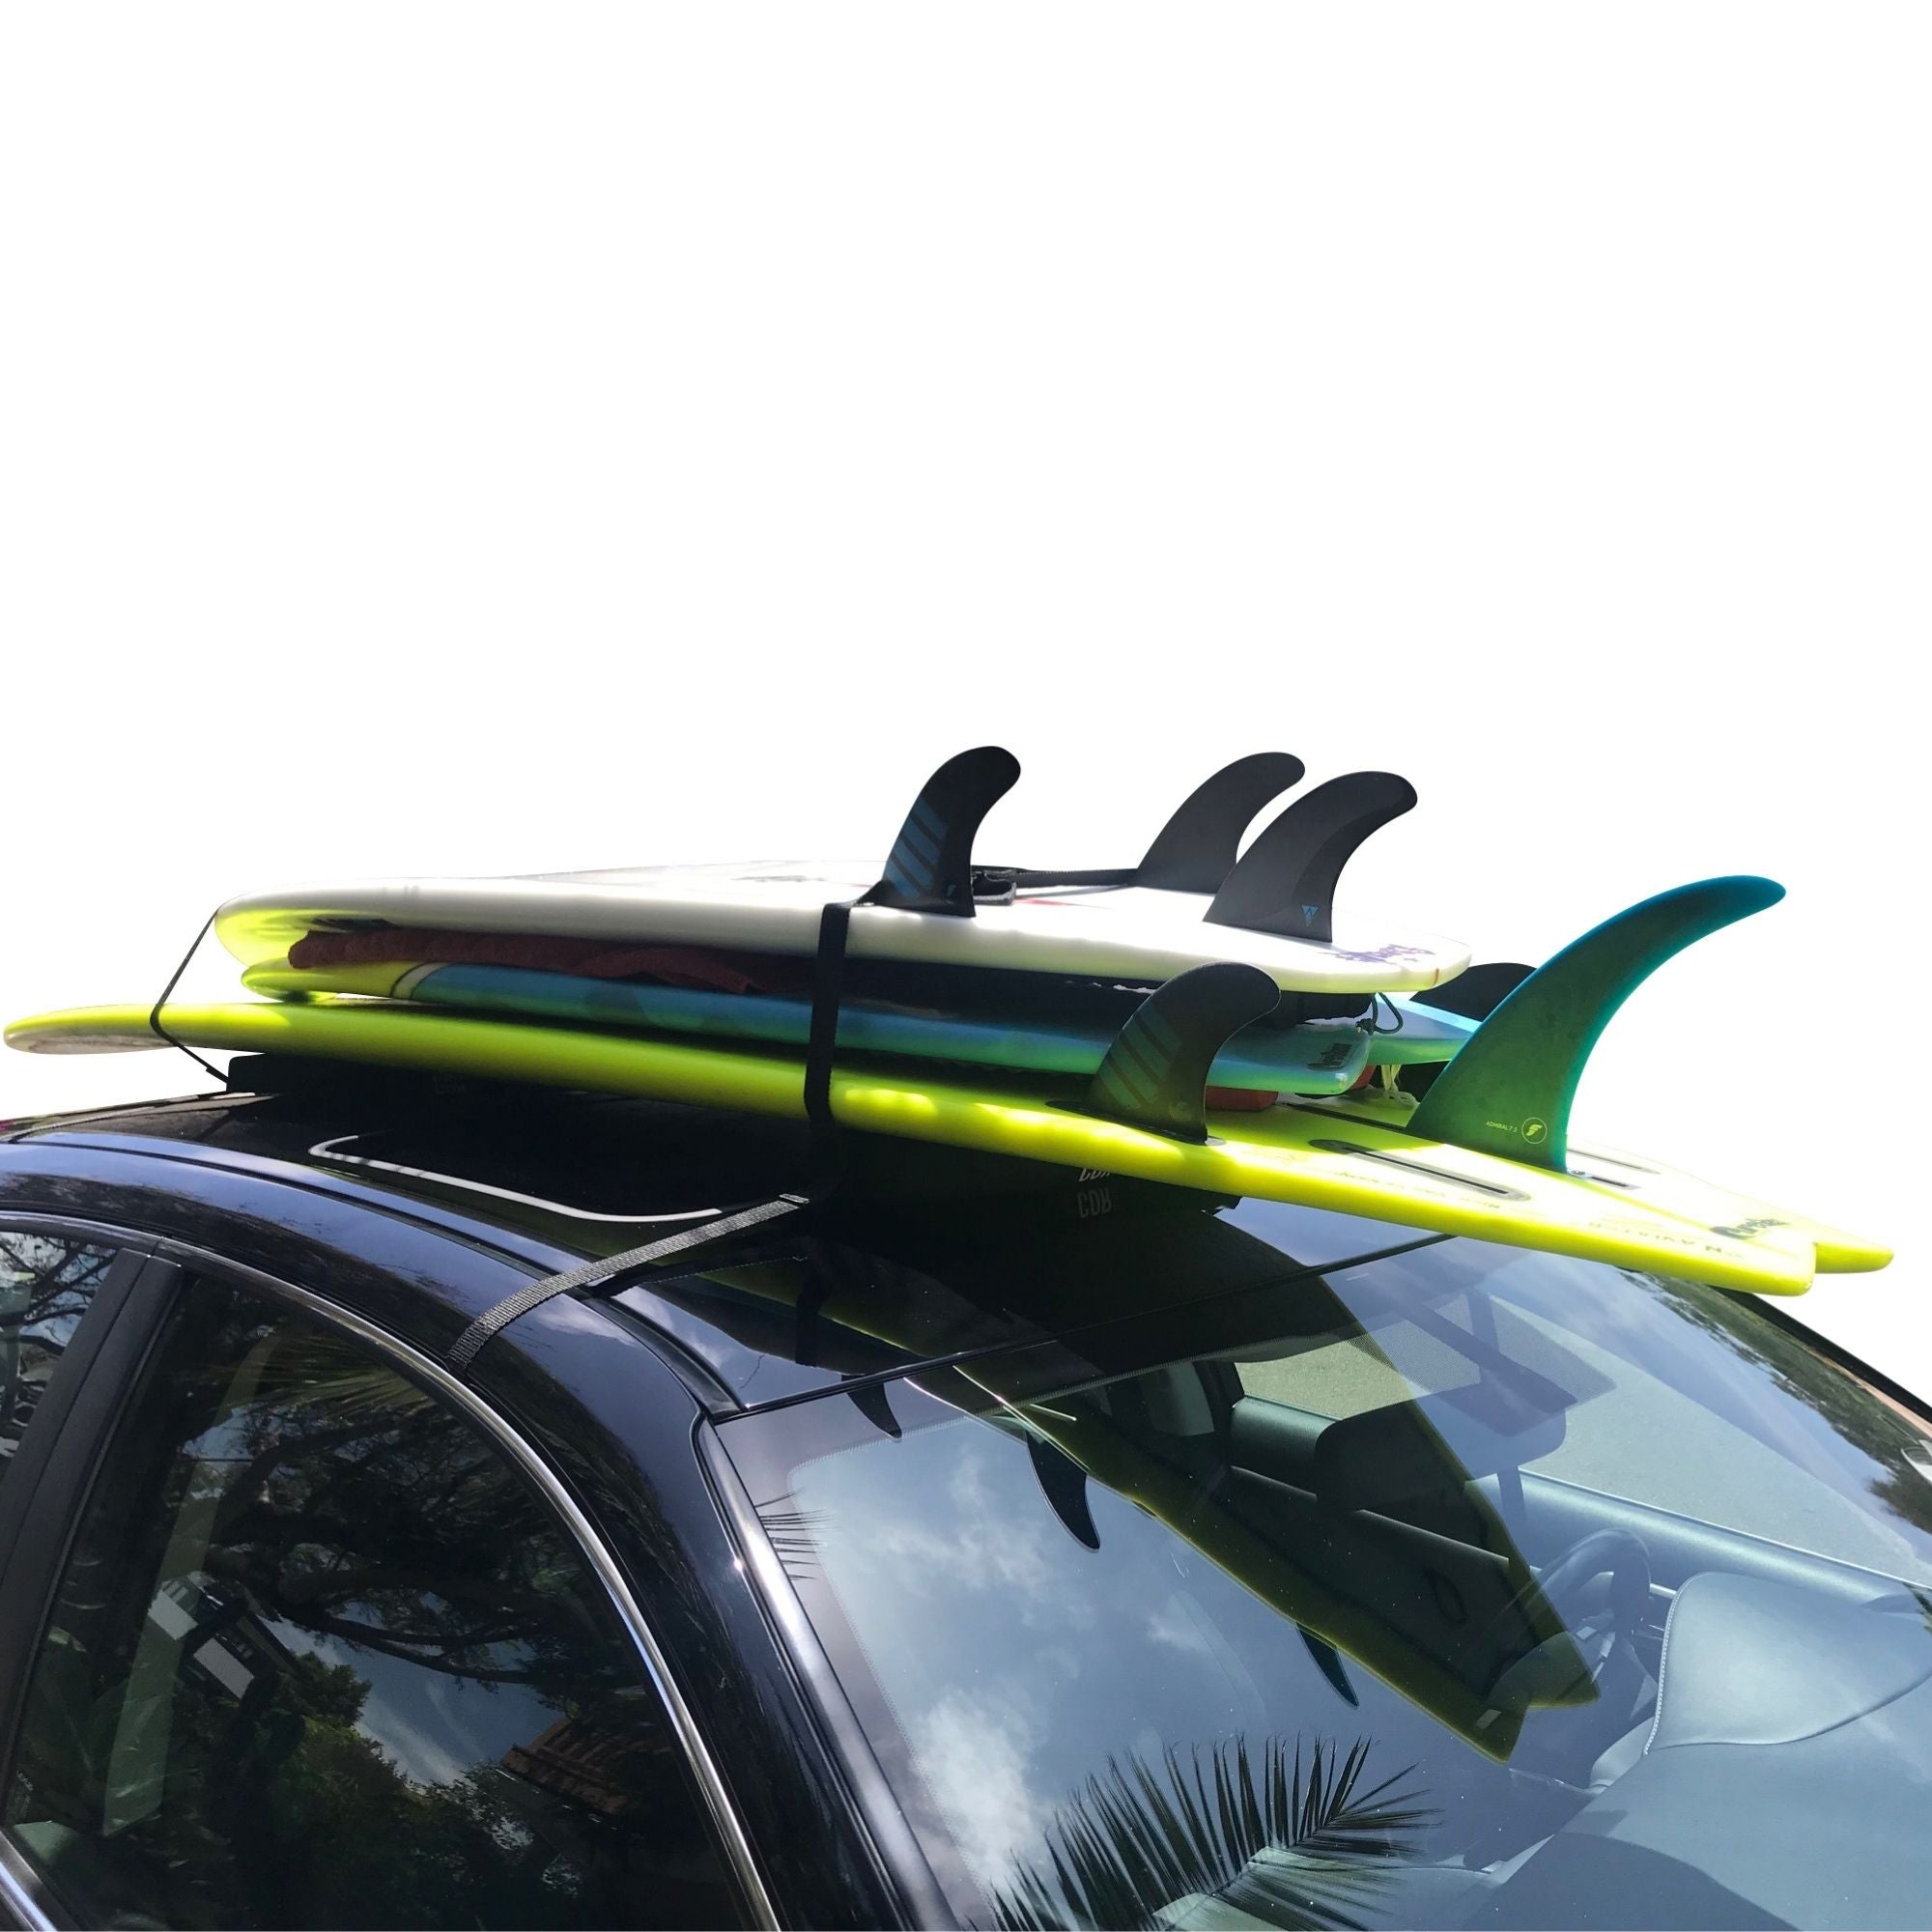 MeeFar Universal Car SUV Soft Roof Rack Pads Cross Bars for Kayak Surf